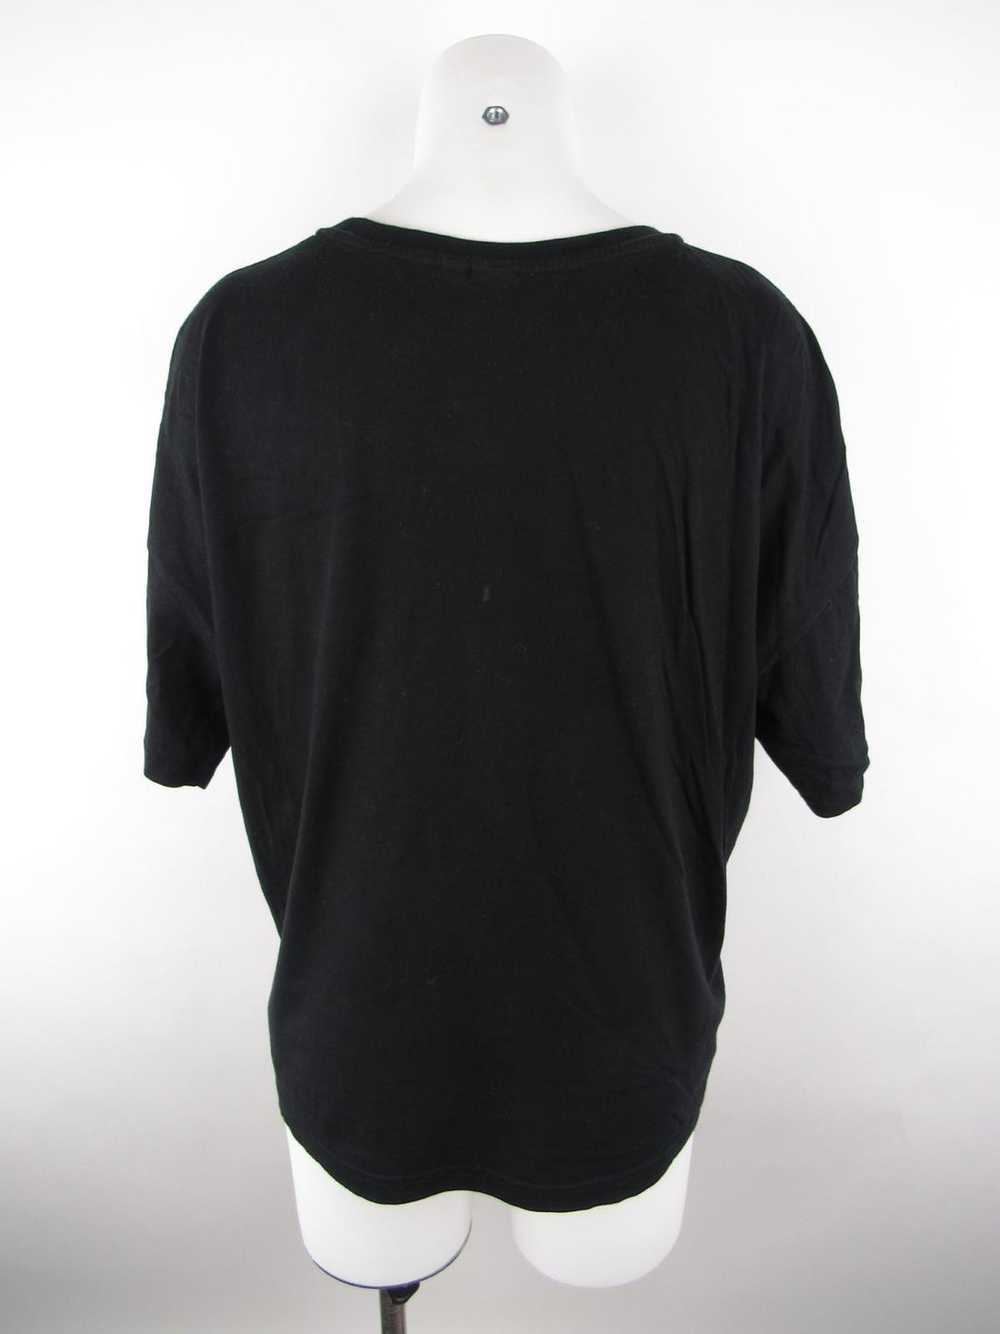 Marimekko Uni Qlo T-Shirt Top - image 2